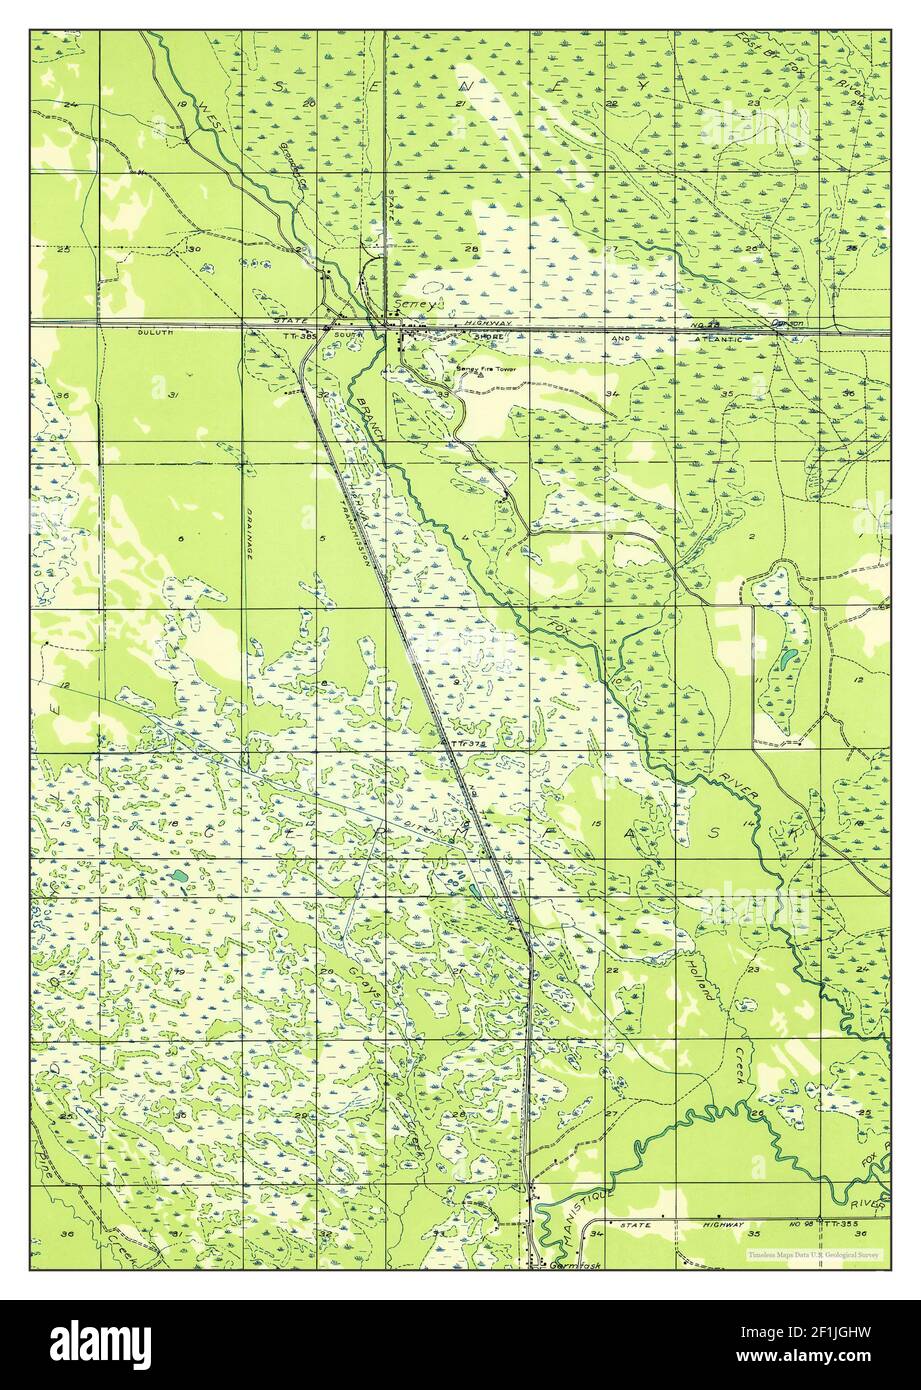 Seney SW, Michigan, map 1931, 1:31680, United States of America by Timeless Maps, data U.S. Geological Survey Stock Photo